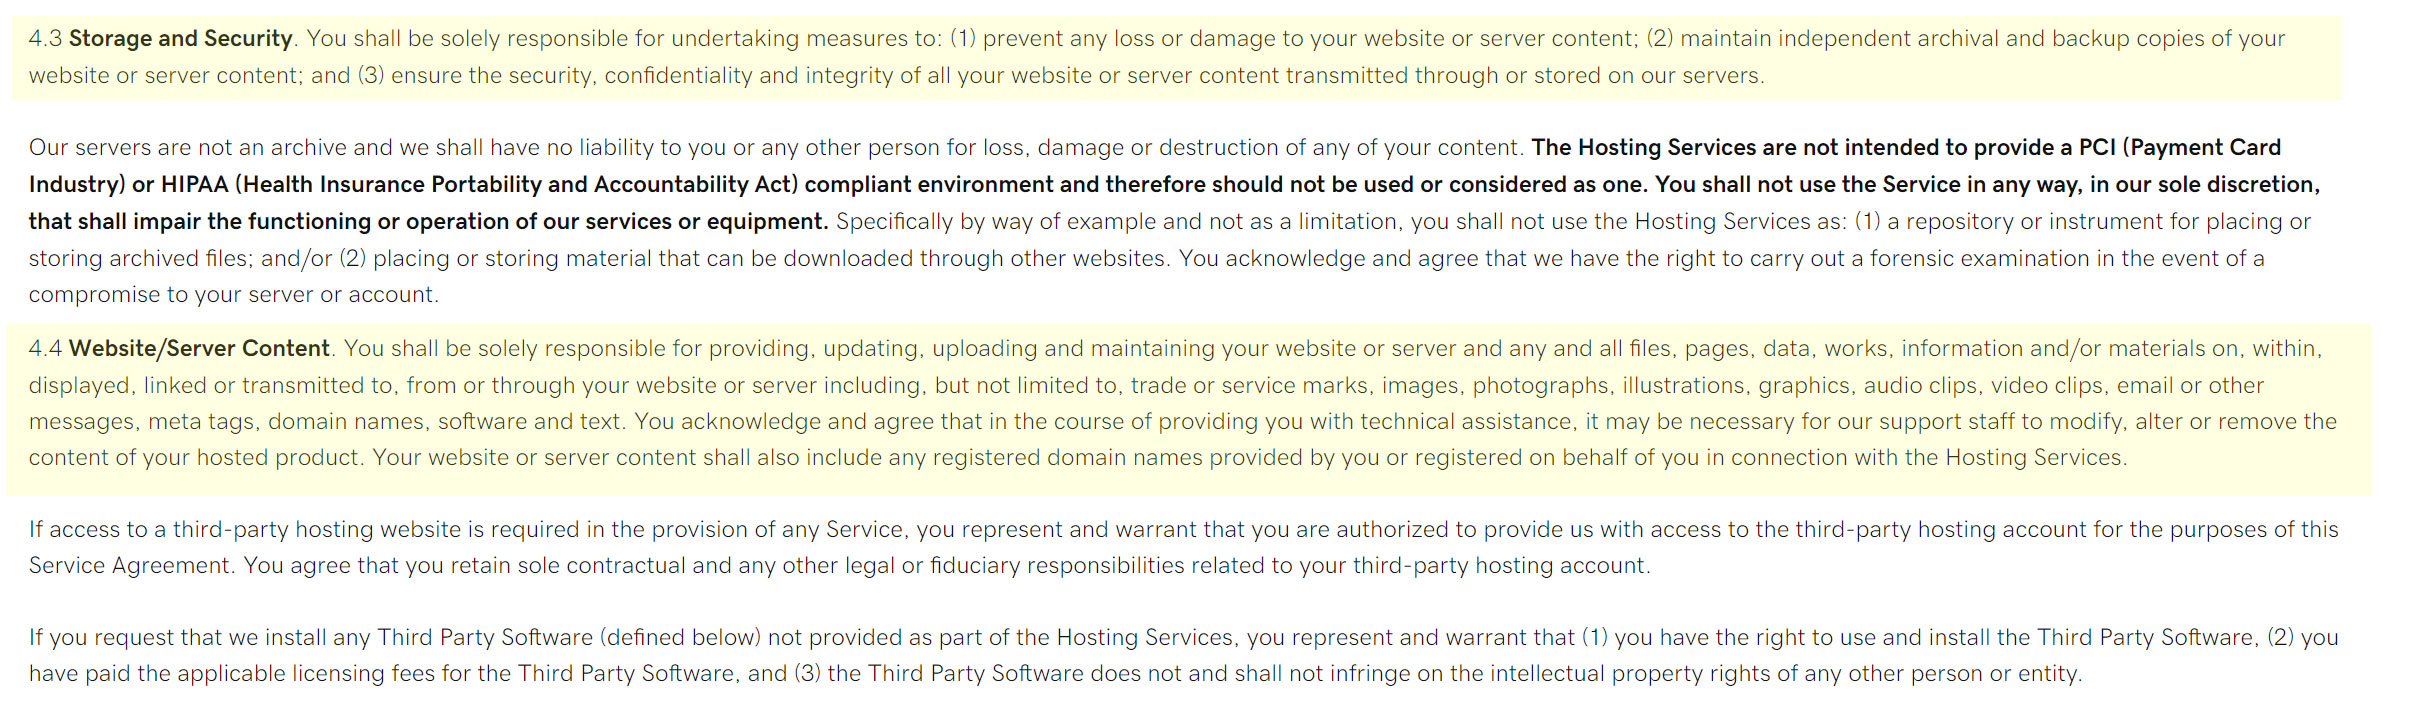 Adirondack Website Developer Backup and Maintenance GoDaddy Hosting Policy